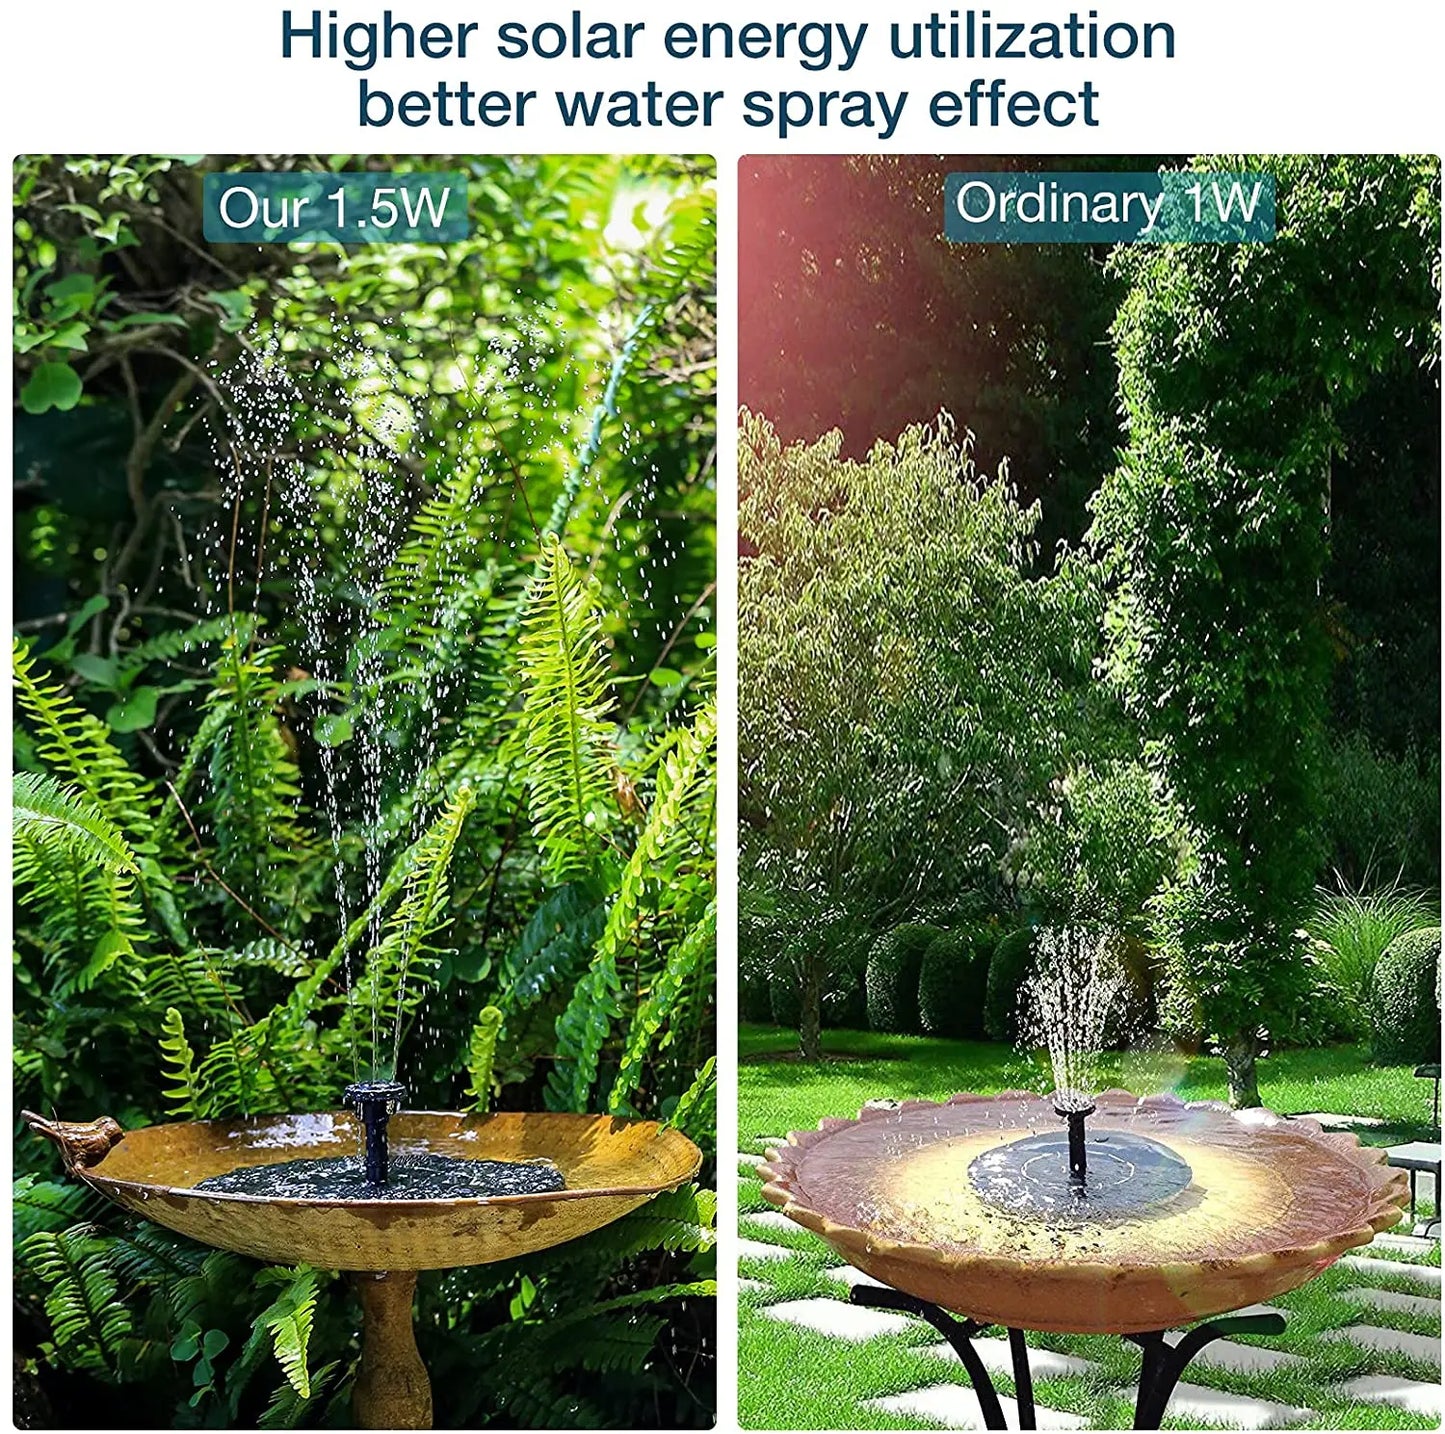 1.5W Solar Fountain Pump, with 6 nozzles Solar Bird Bath Fountain